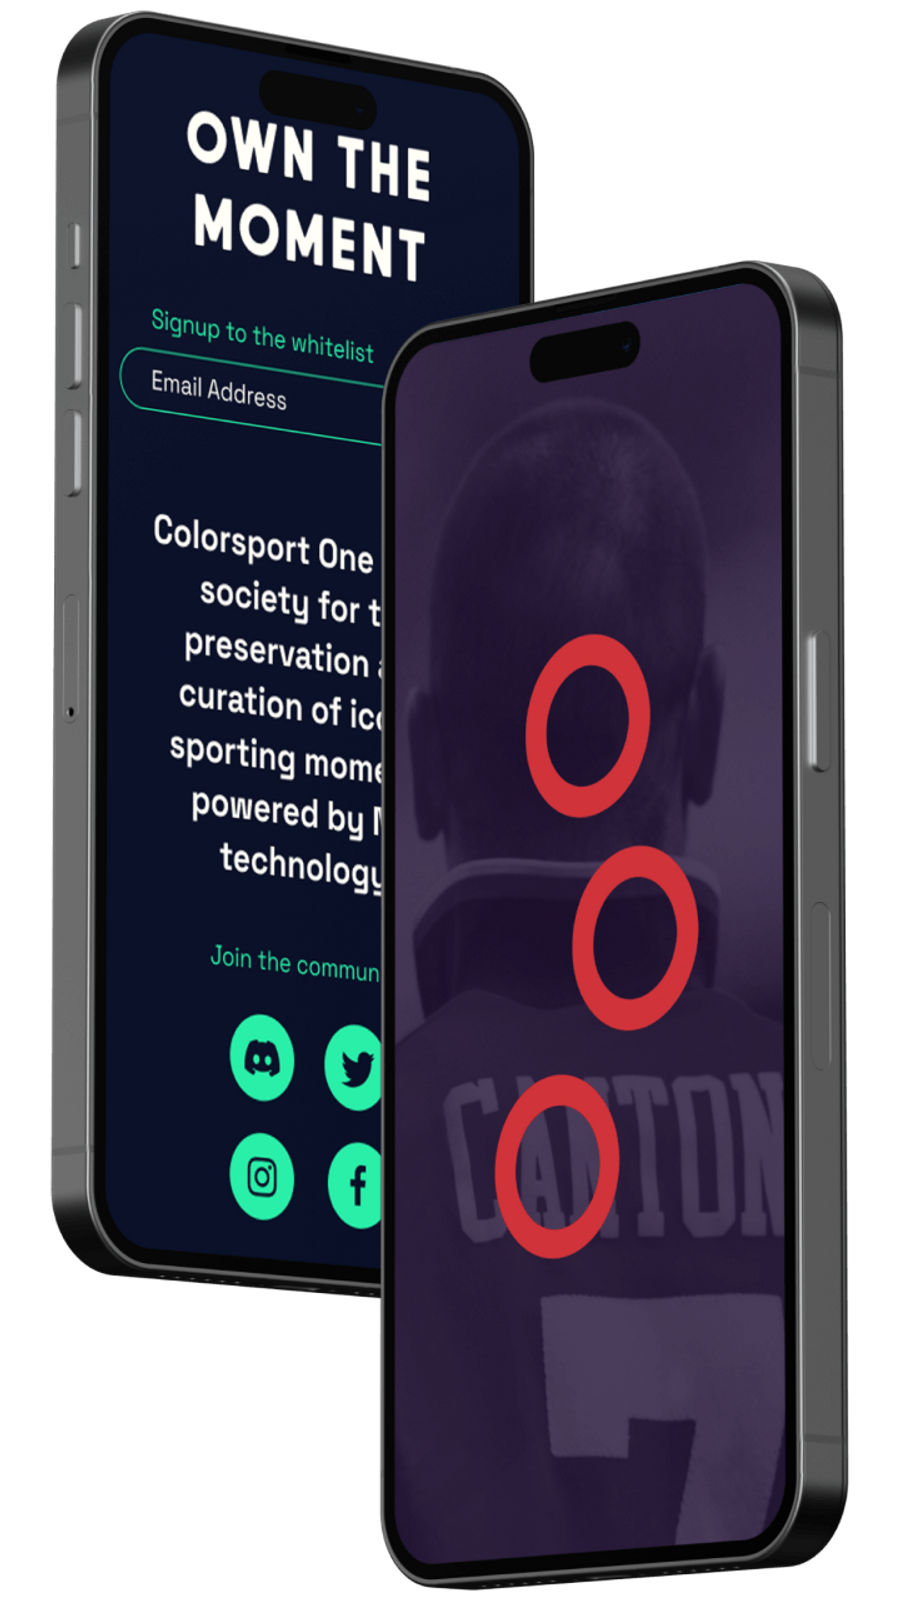 Colorsport mobile website design with new branding